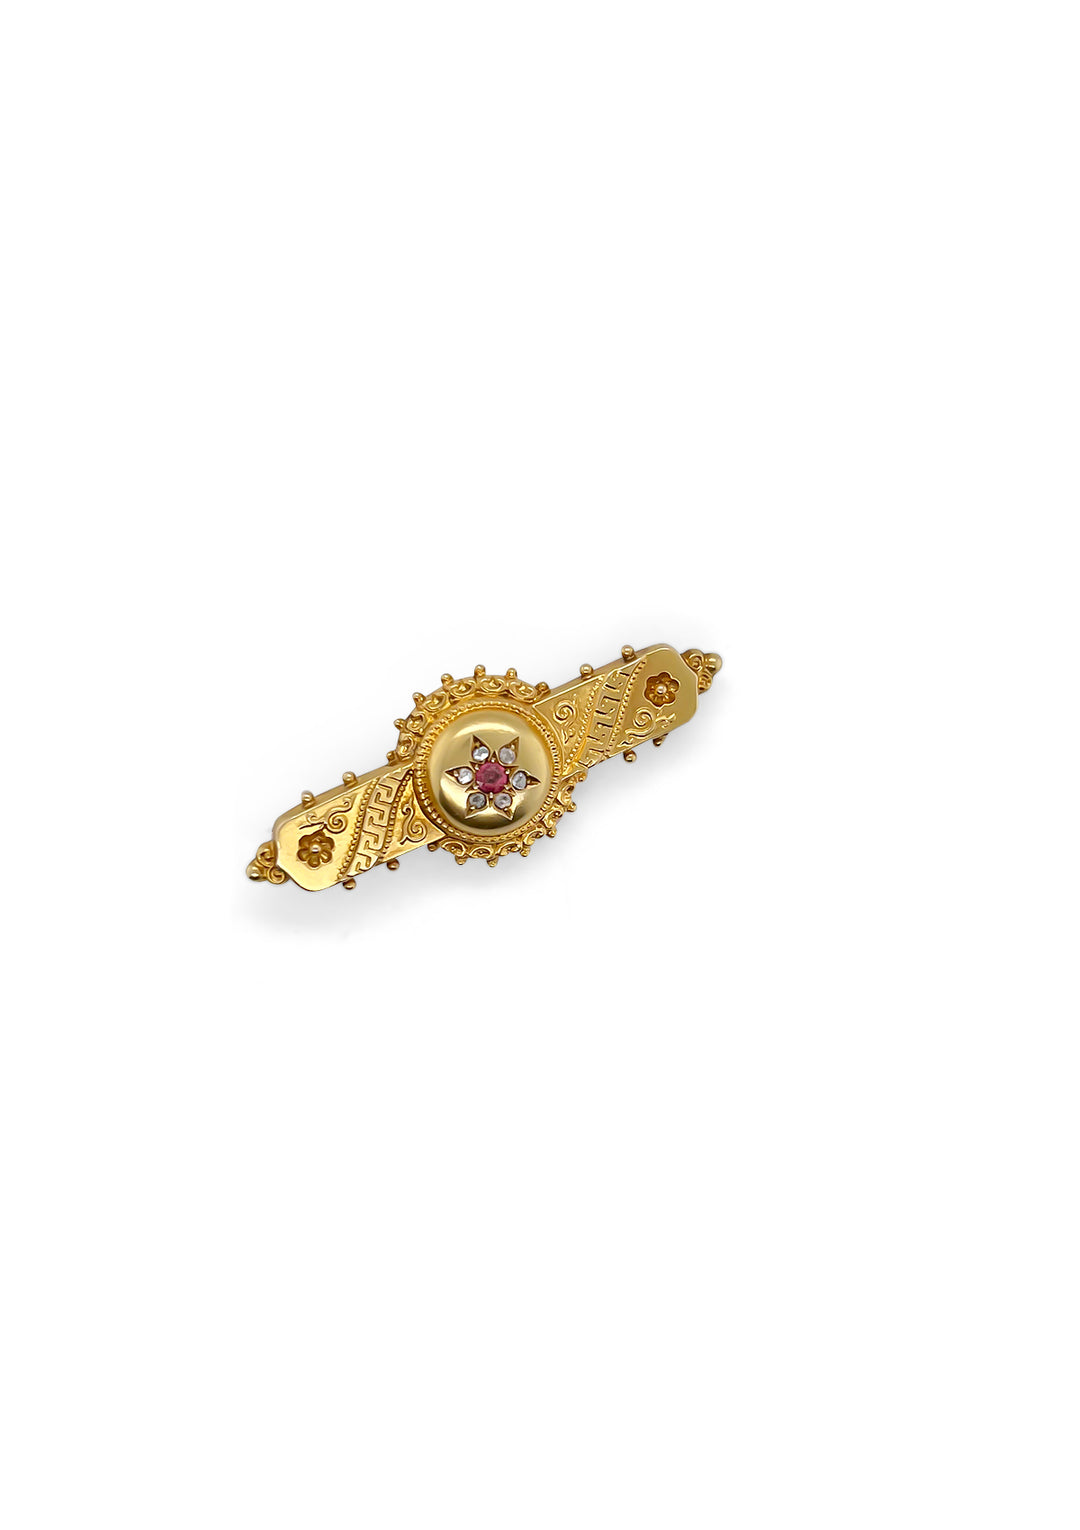 9K Yellow Gold 1900'd Rose Cut Diamond Brooch/Pin